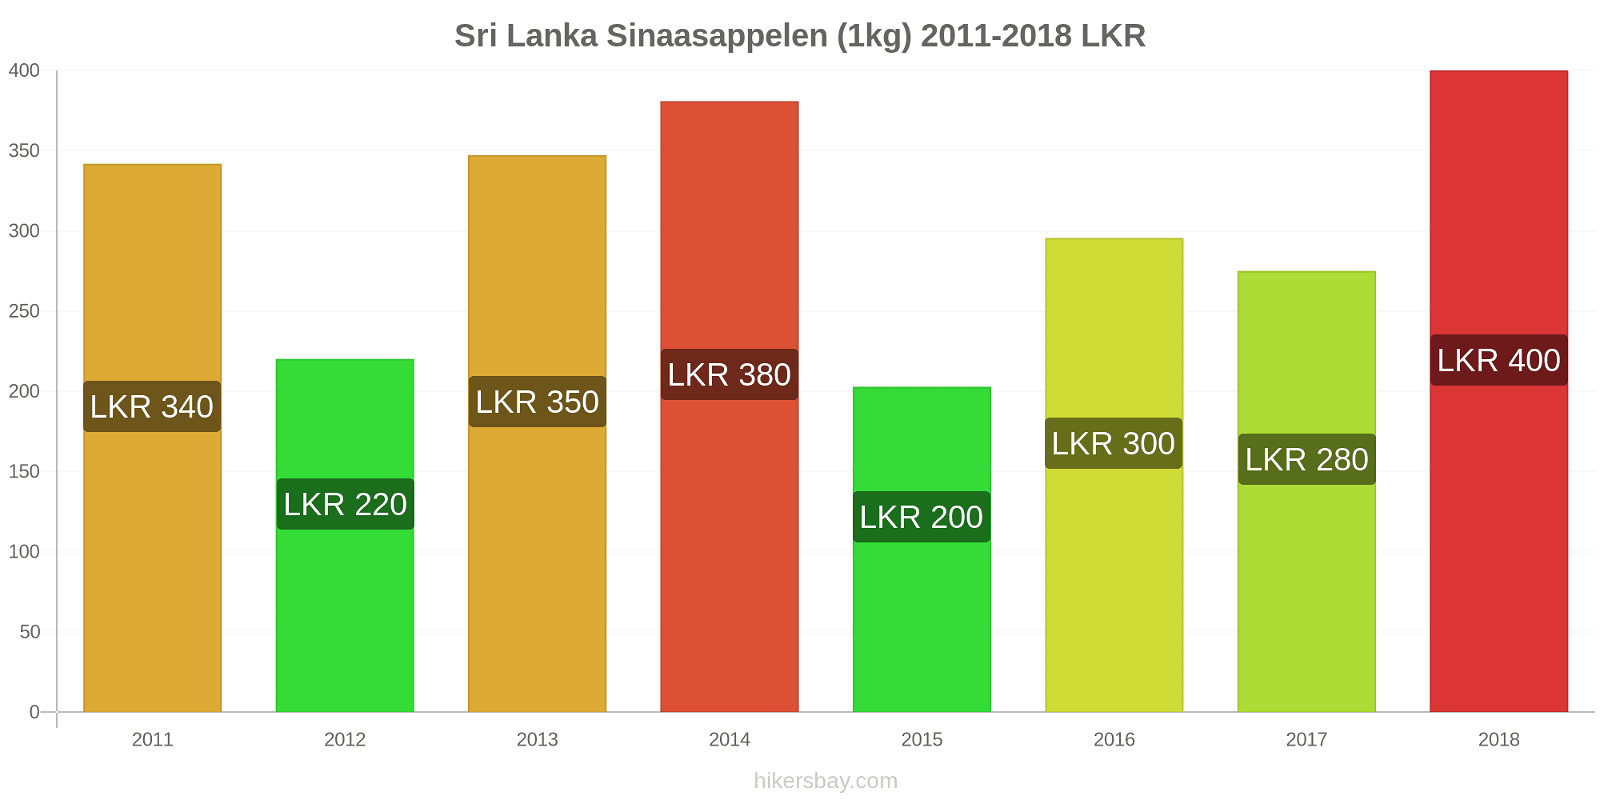 Sri Lanka prijswijzigingen Sinaasappels (1kg) hikersbay.com